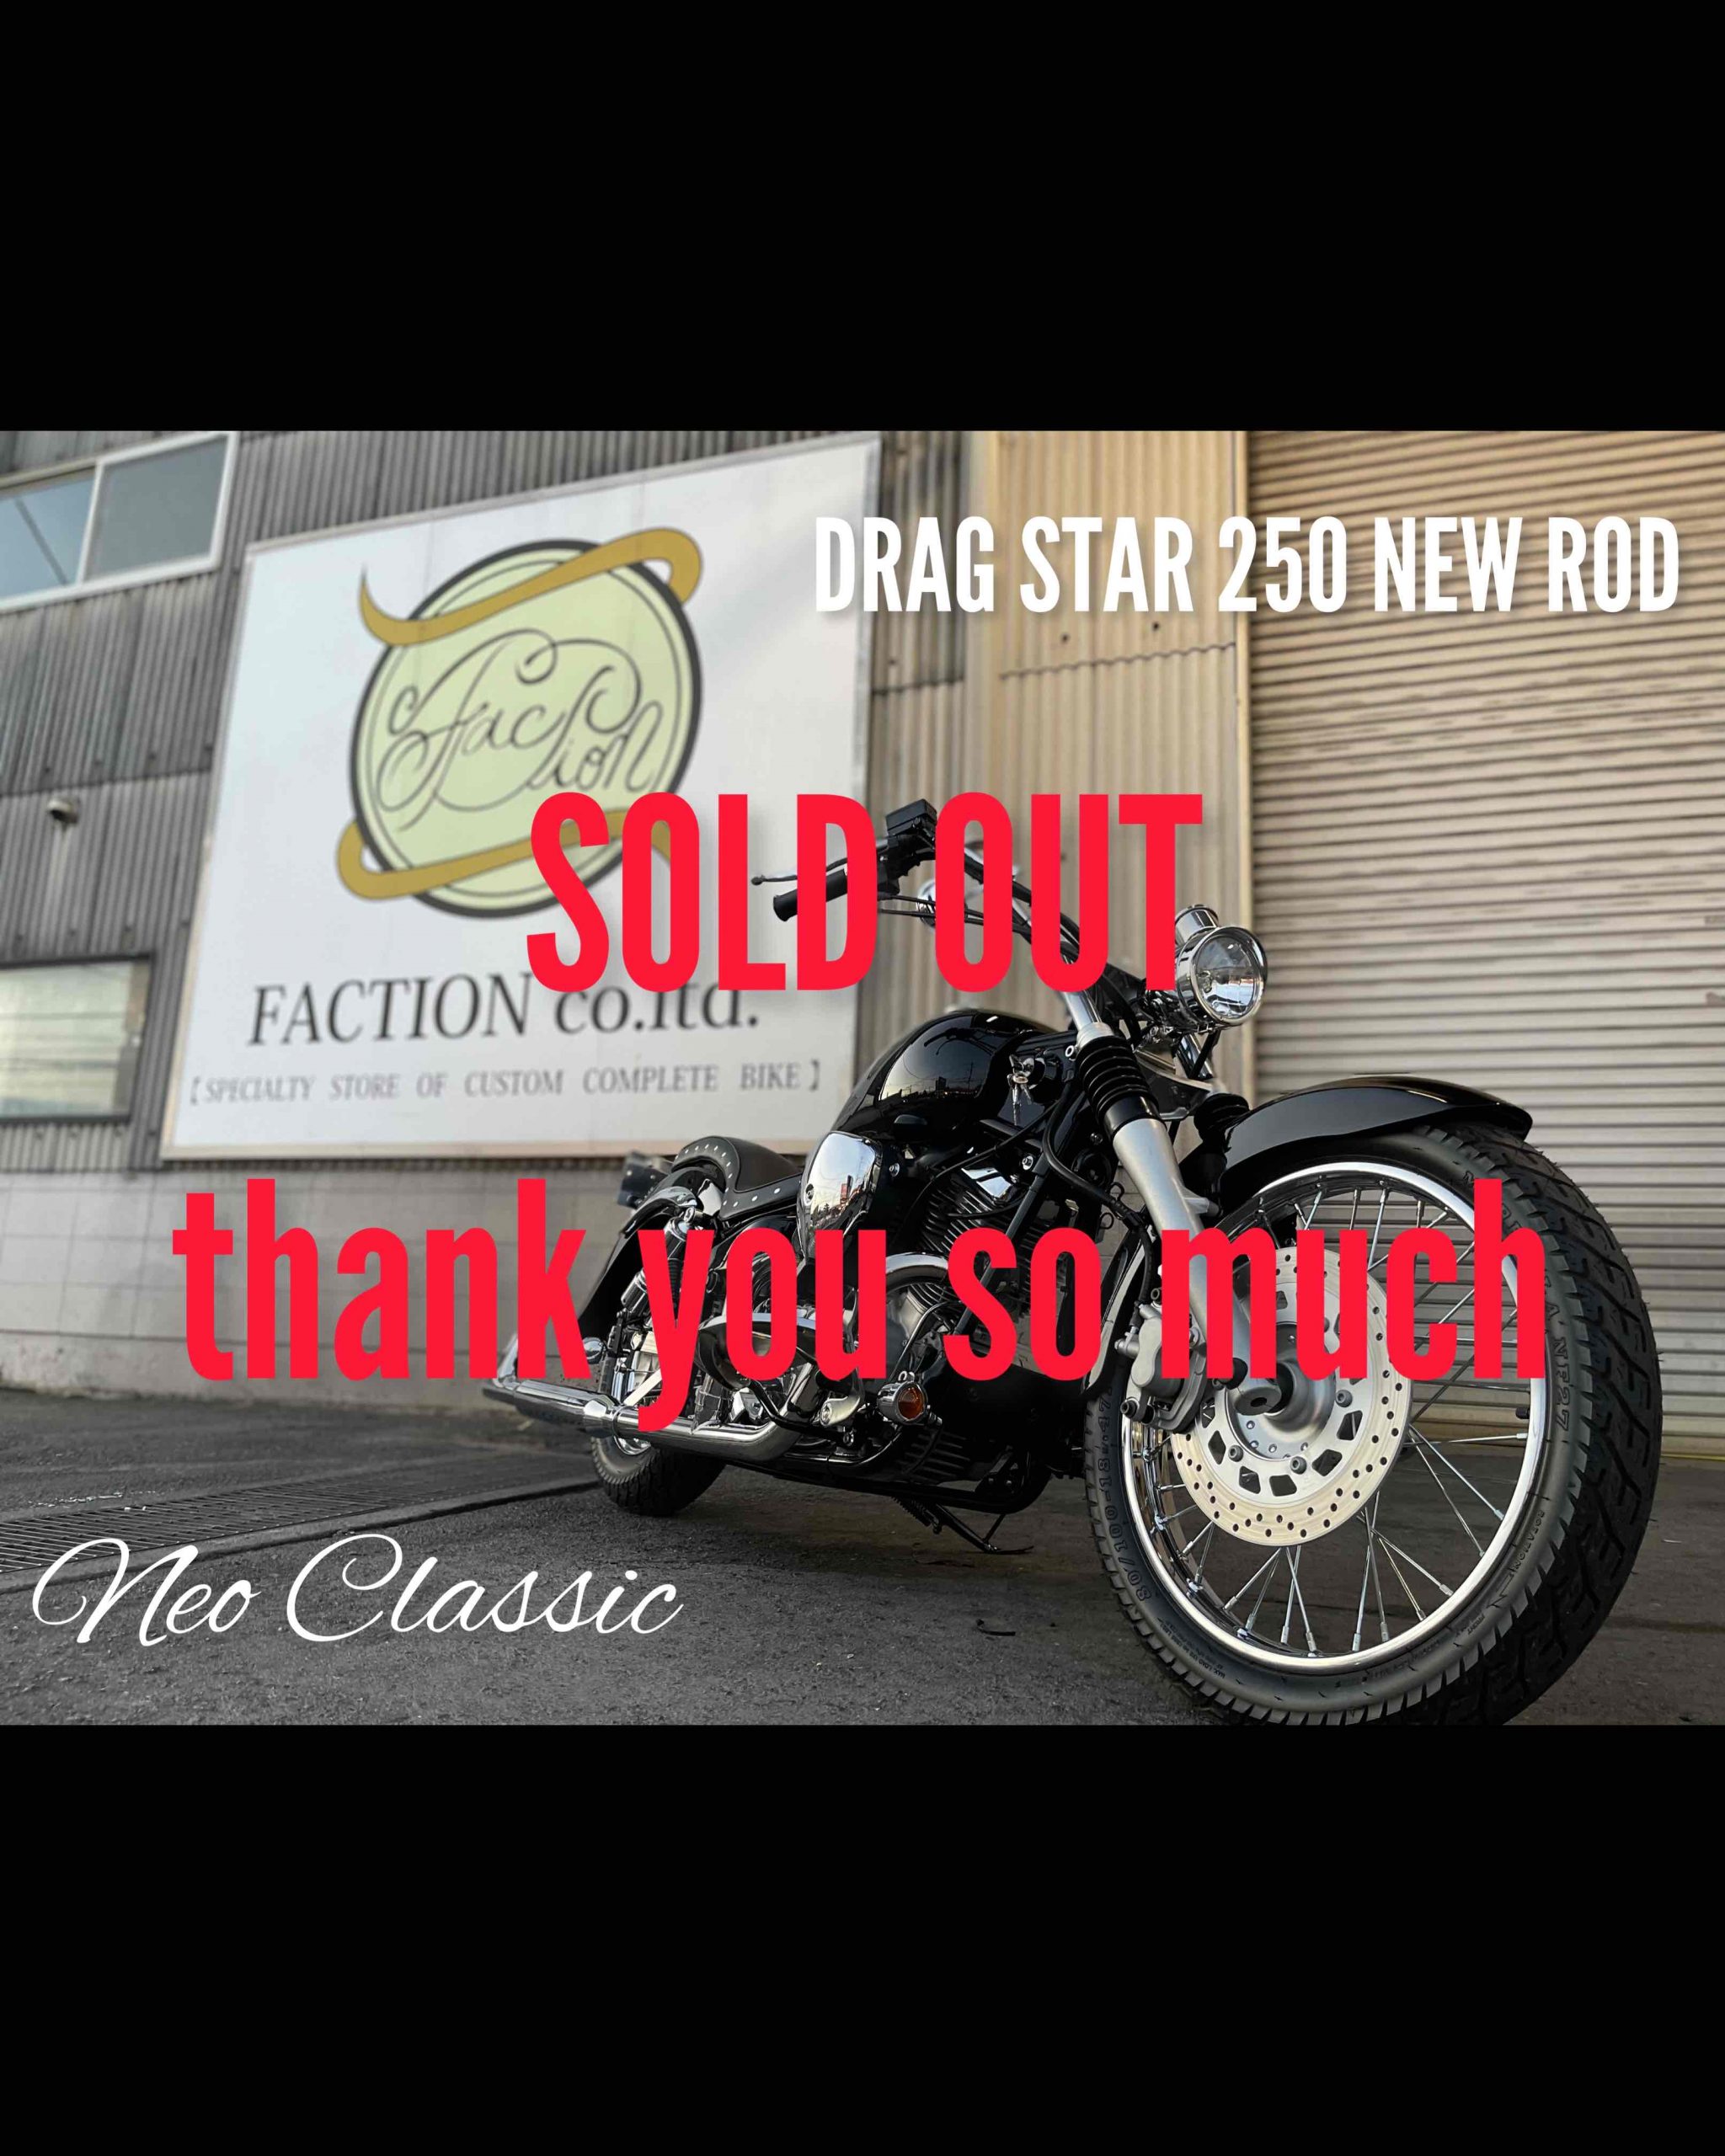 DragStar250 NEW ROD／Neo Classic ご成約ありがとうございました☆